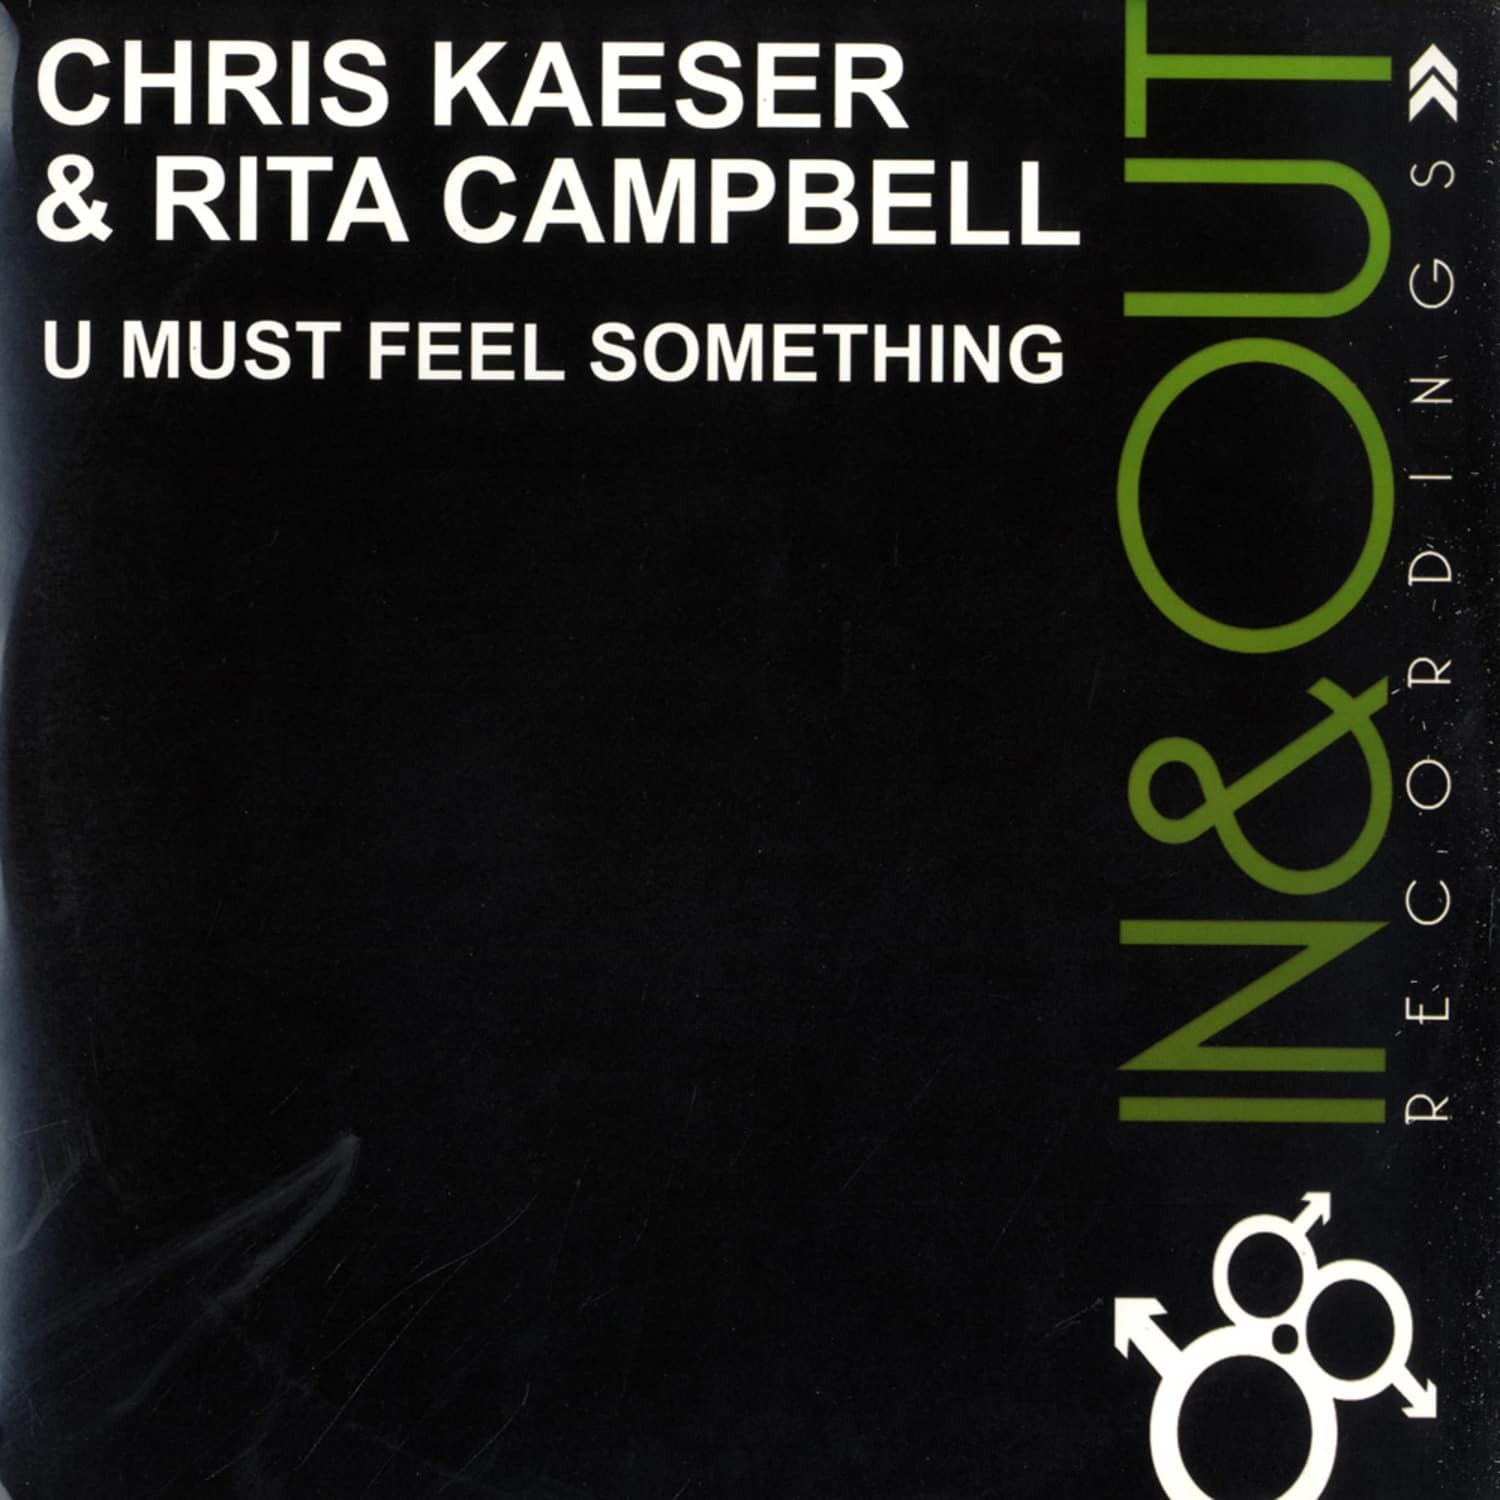 Chris Kaeser / Rita Campbell - U MUST FEEL SOMETHING